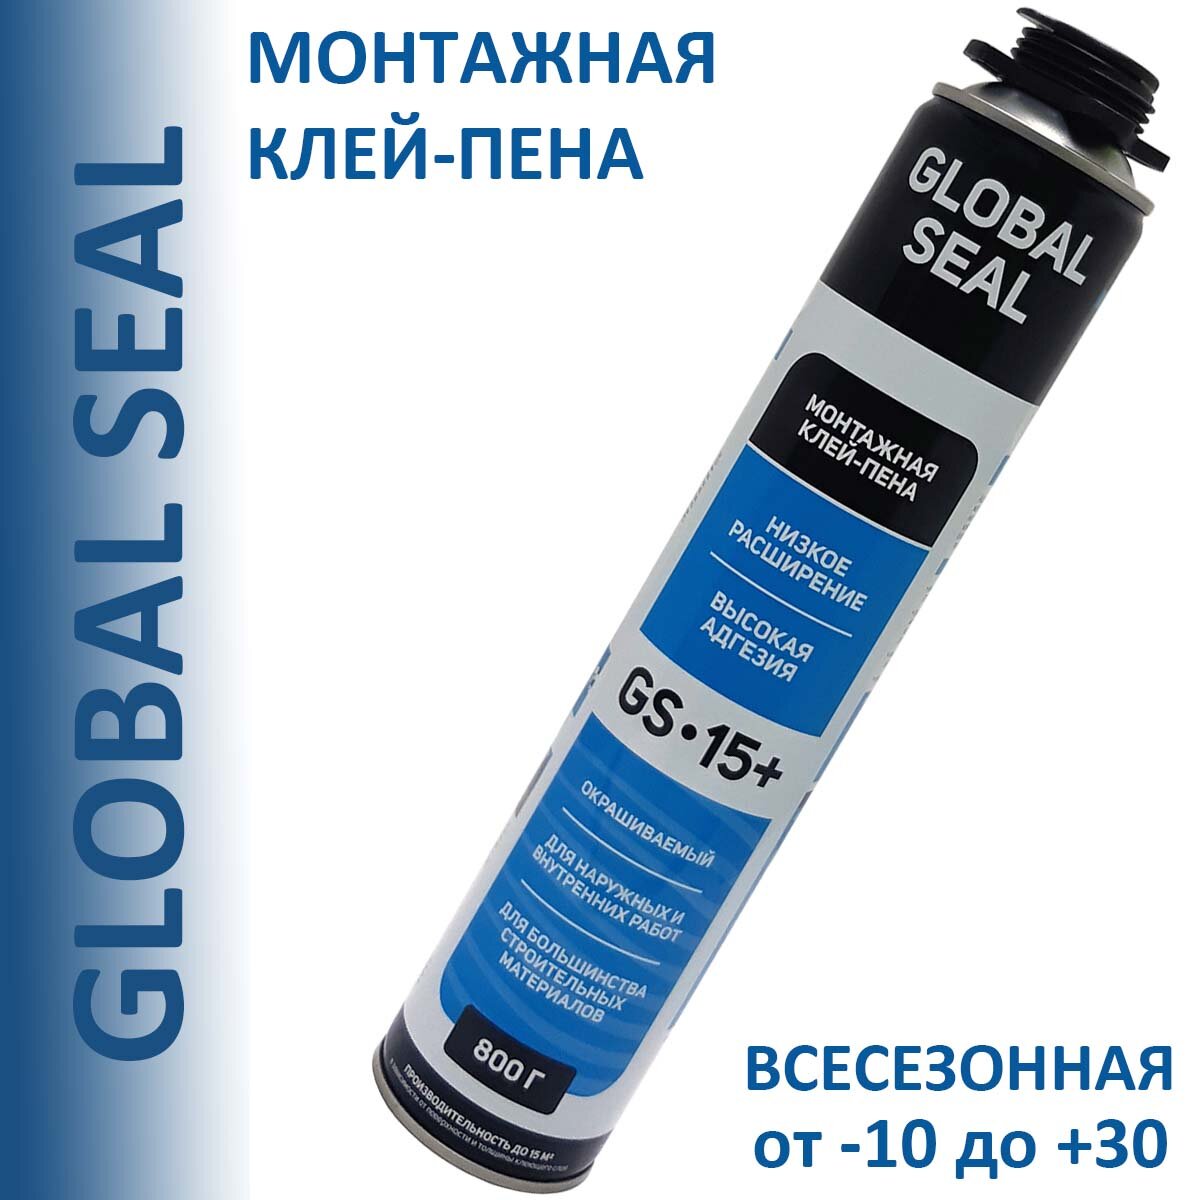 Клей-пена монтажная GLOBAL SEAL GS-15, всесезонная, 800 гр